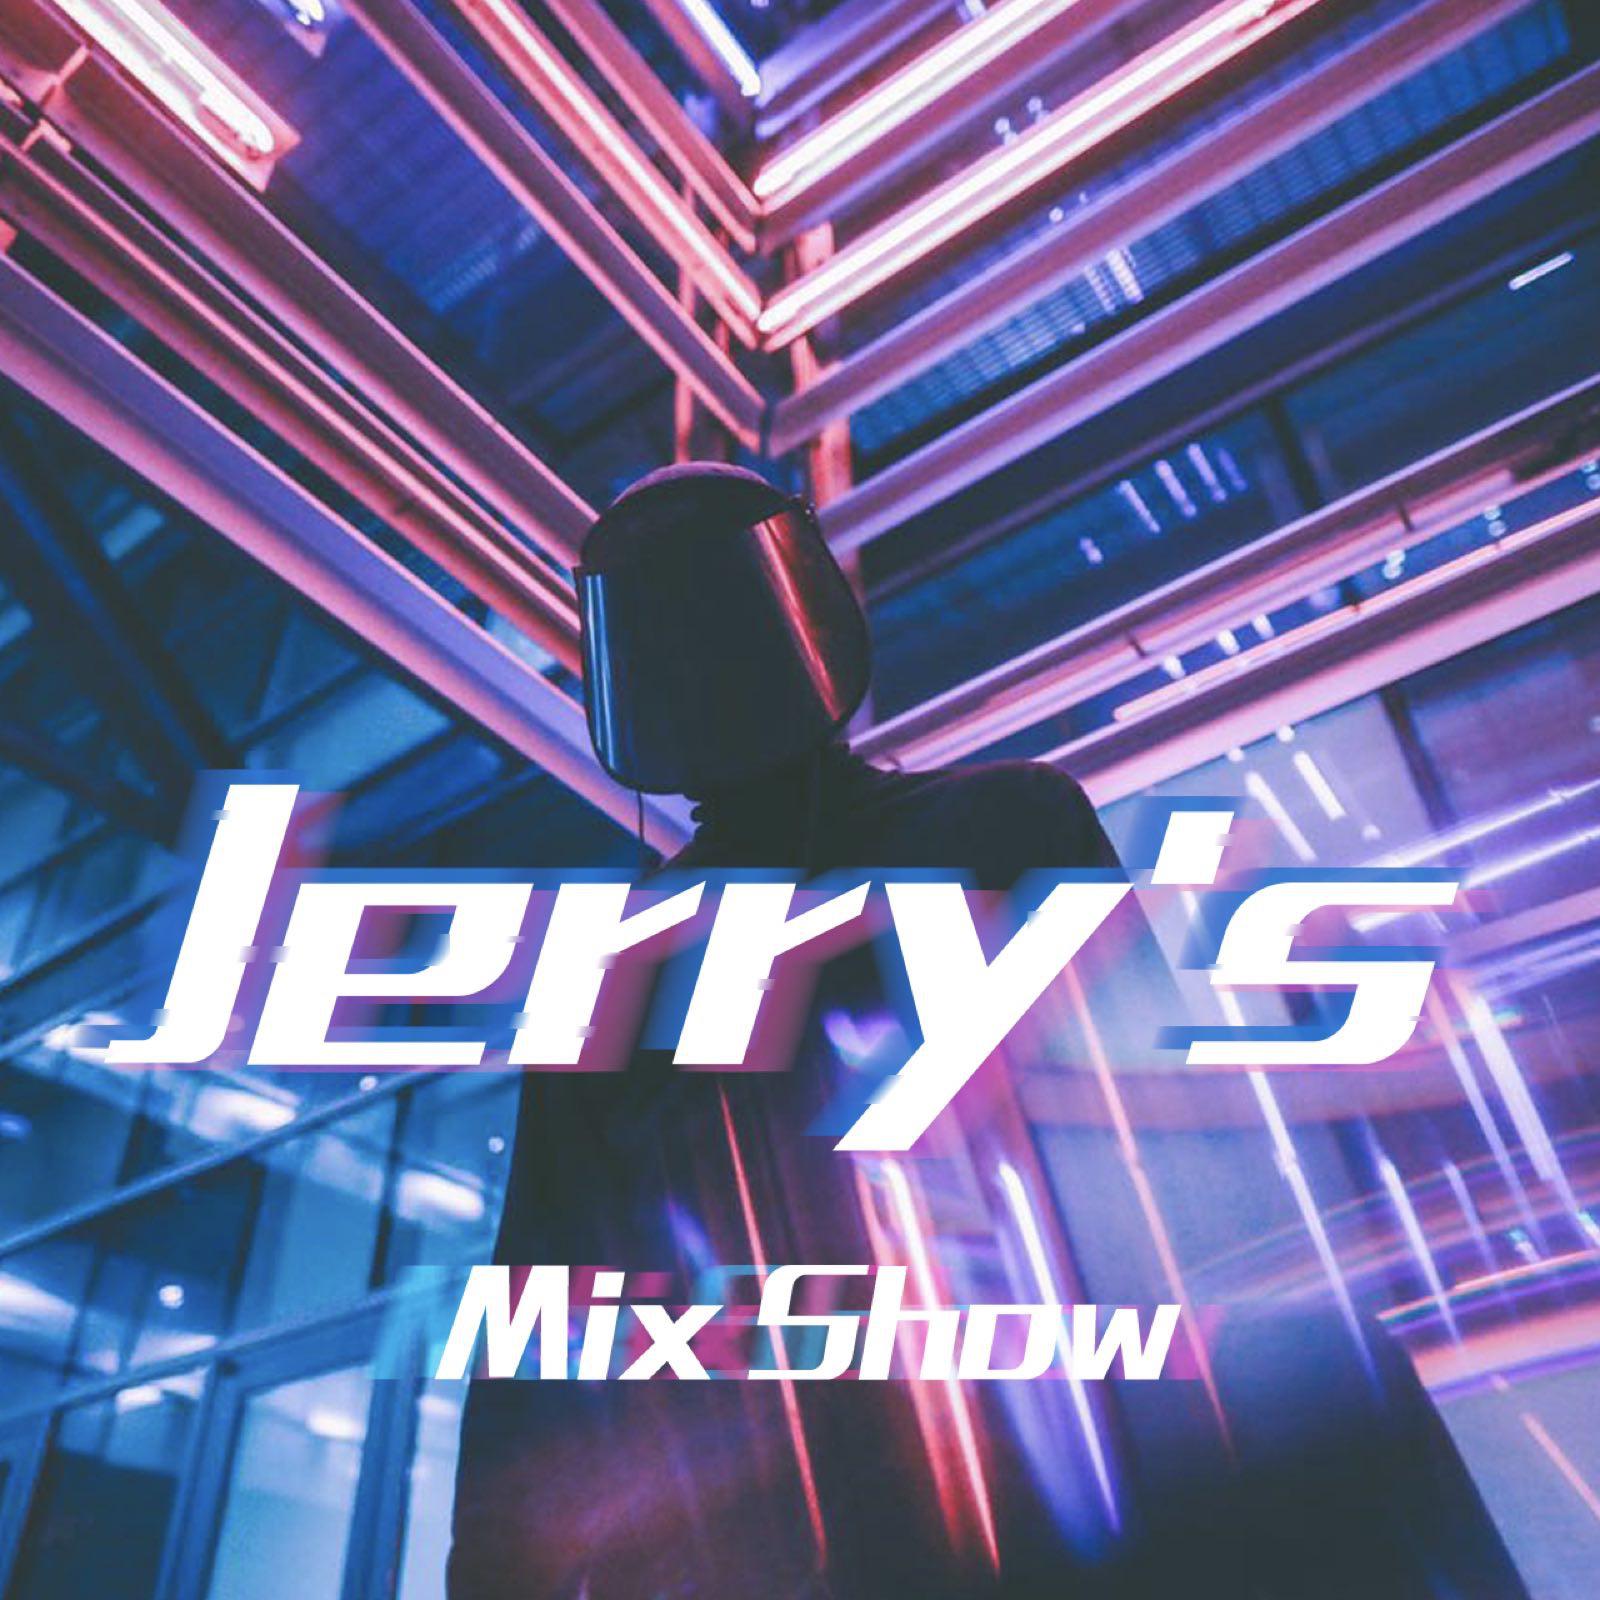 Jerry's MIX SHOW#2